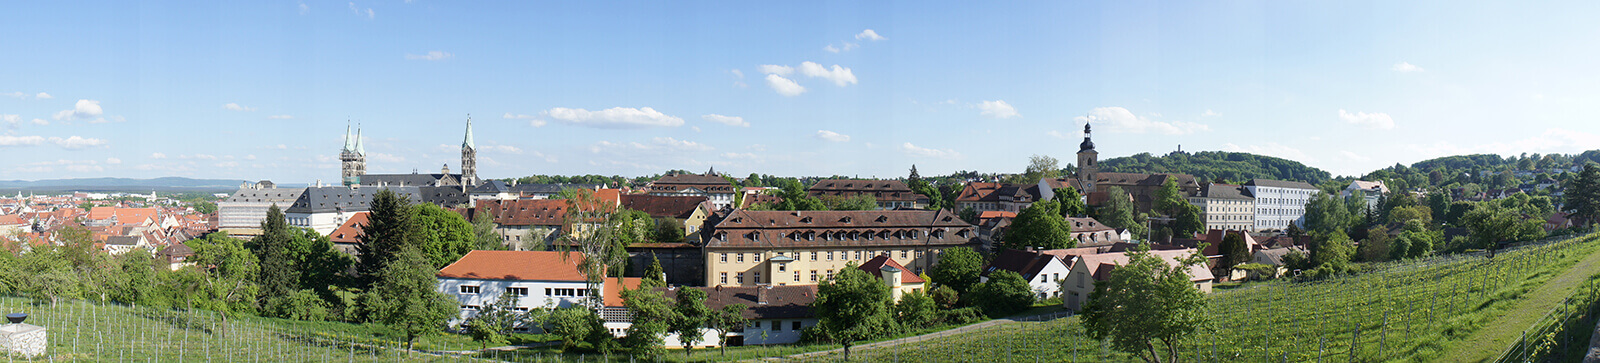 Panorama of Bamberg, Germany.